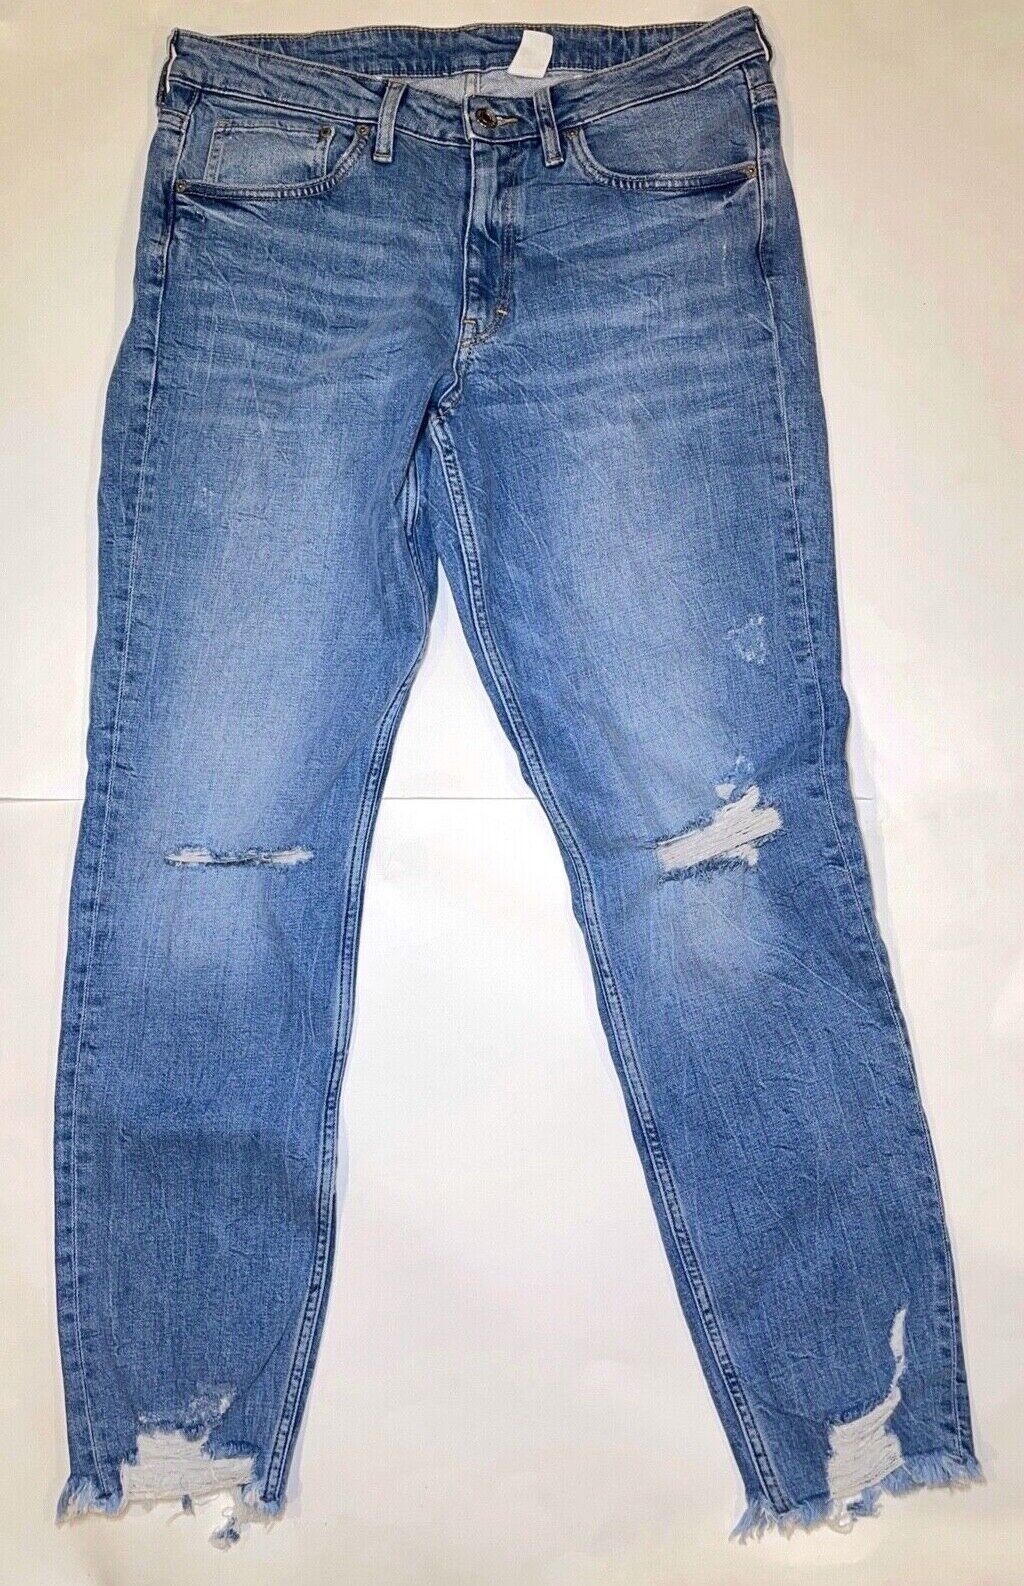 Groot Uitwisseling maak het plat Pre-Owned &denim by H&M Light Wash Girlfriend Fit Jeans Size 31 | eBay